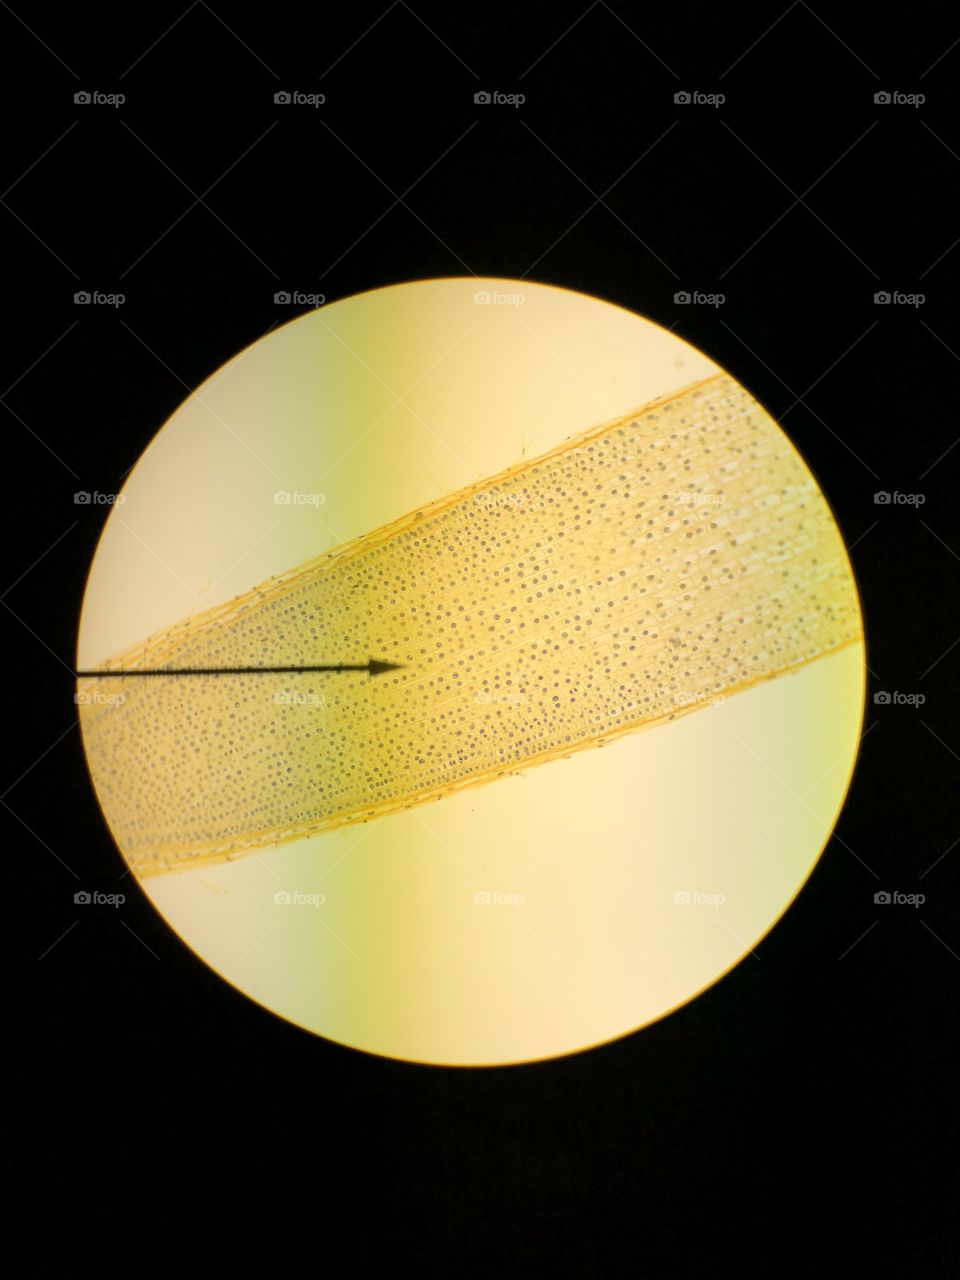 A photo through a microscope